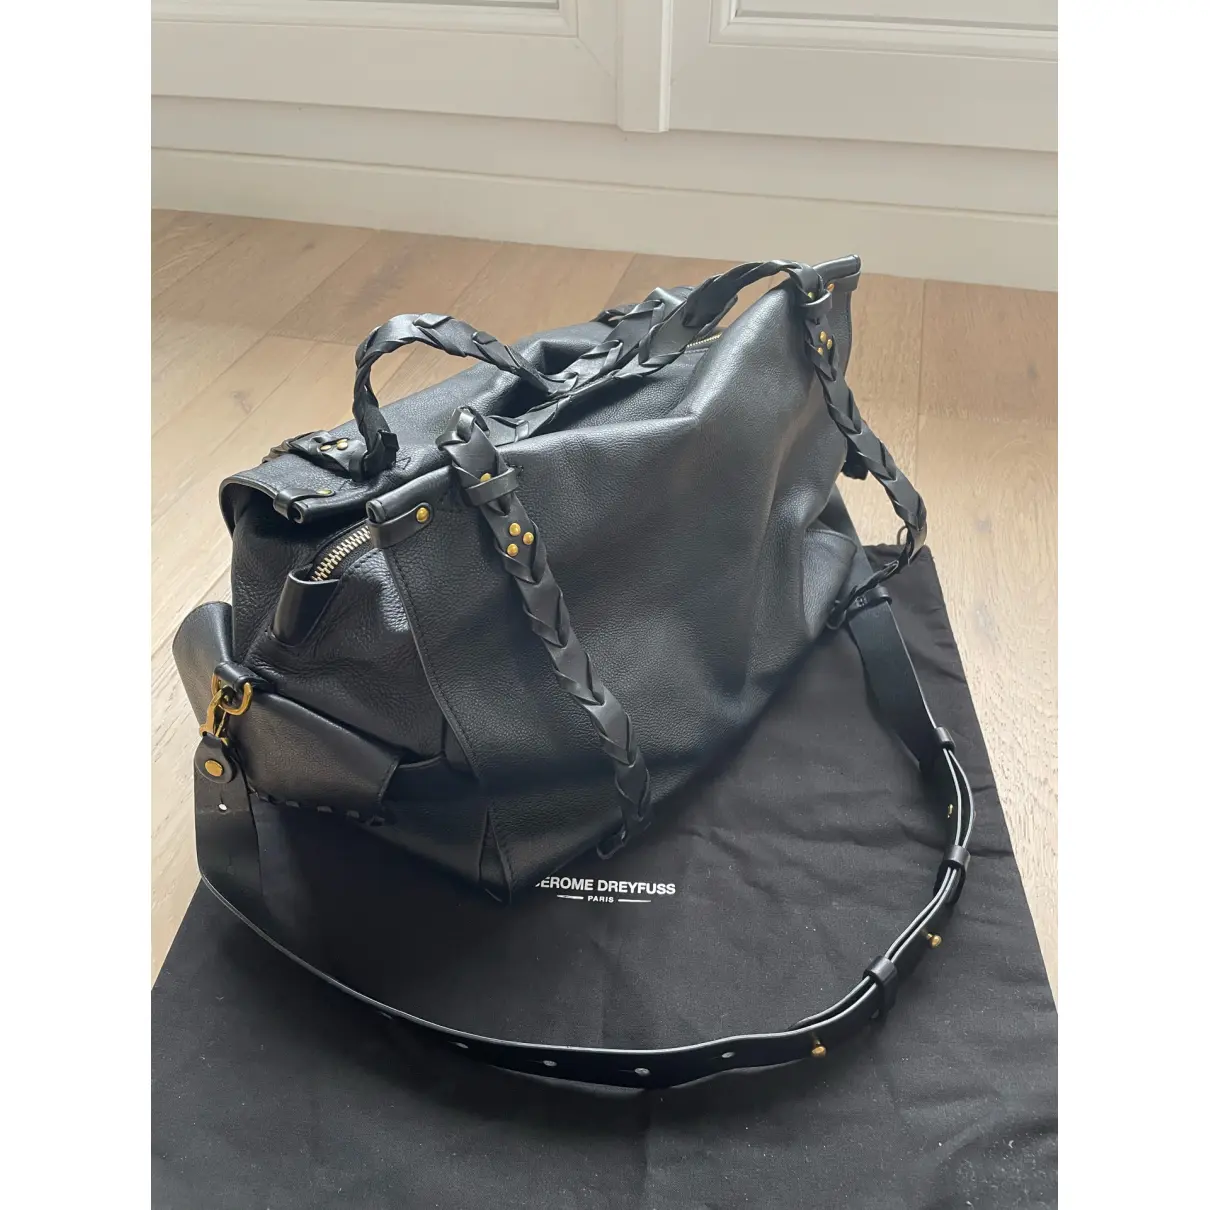 Buy Jerome Dreyfuss Leather crossbody bag online